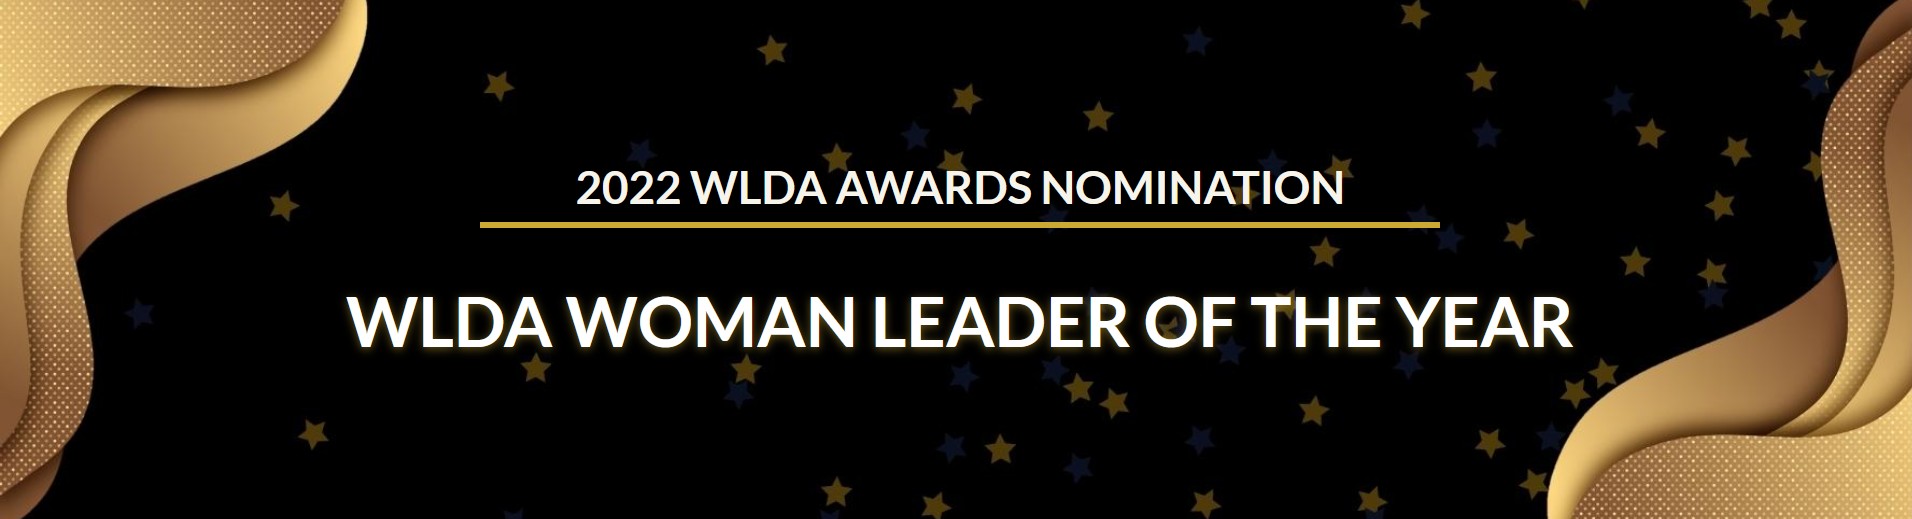 WLDA-WOMAN-LEADER-OF-YEAR